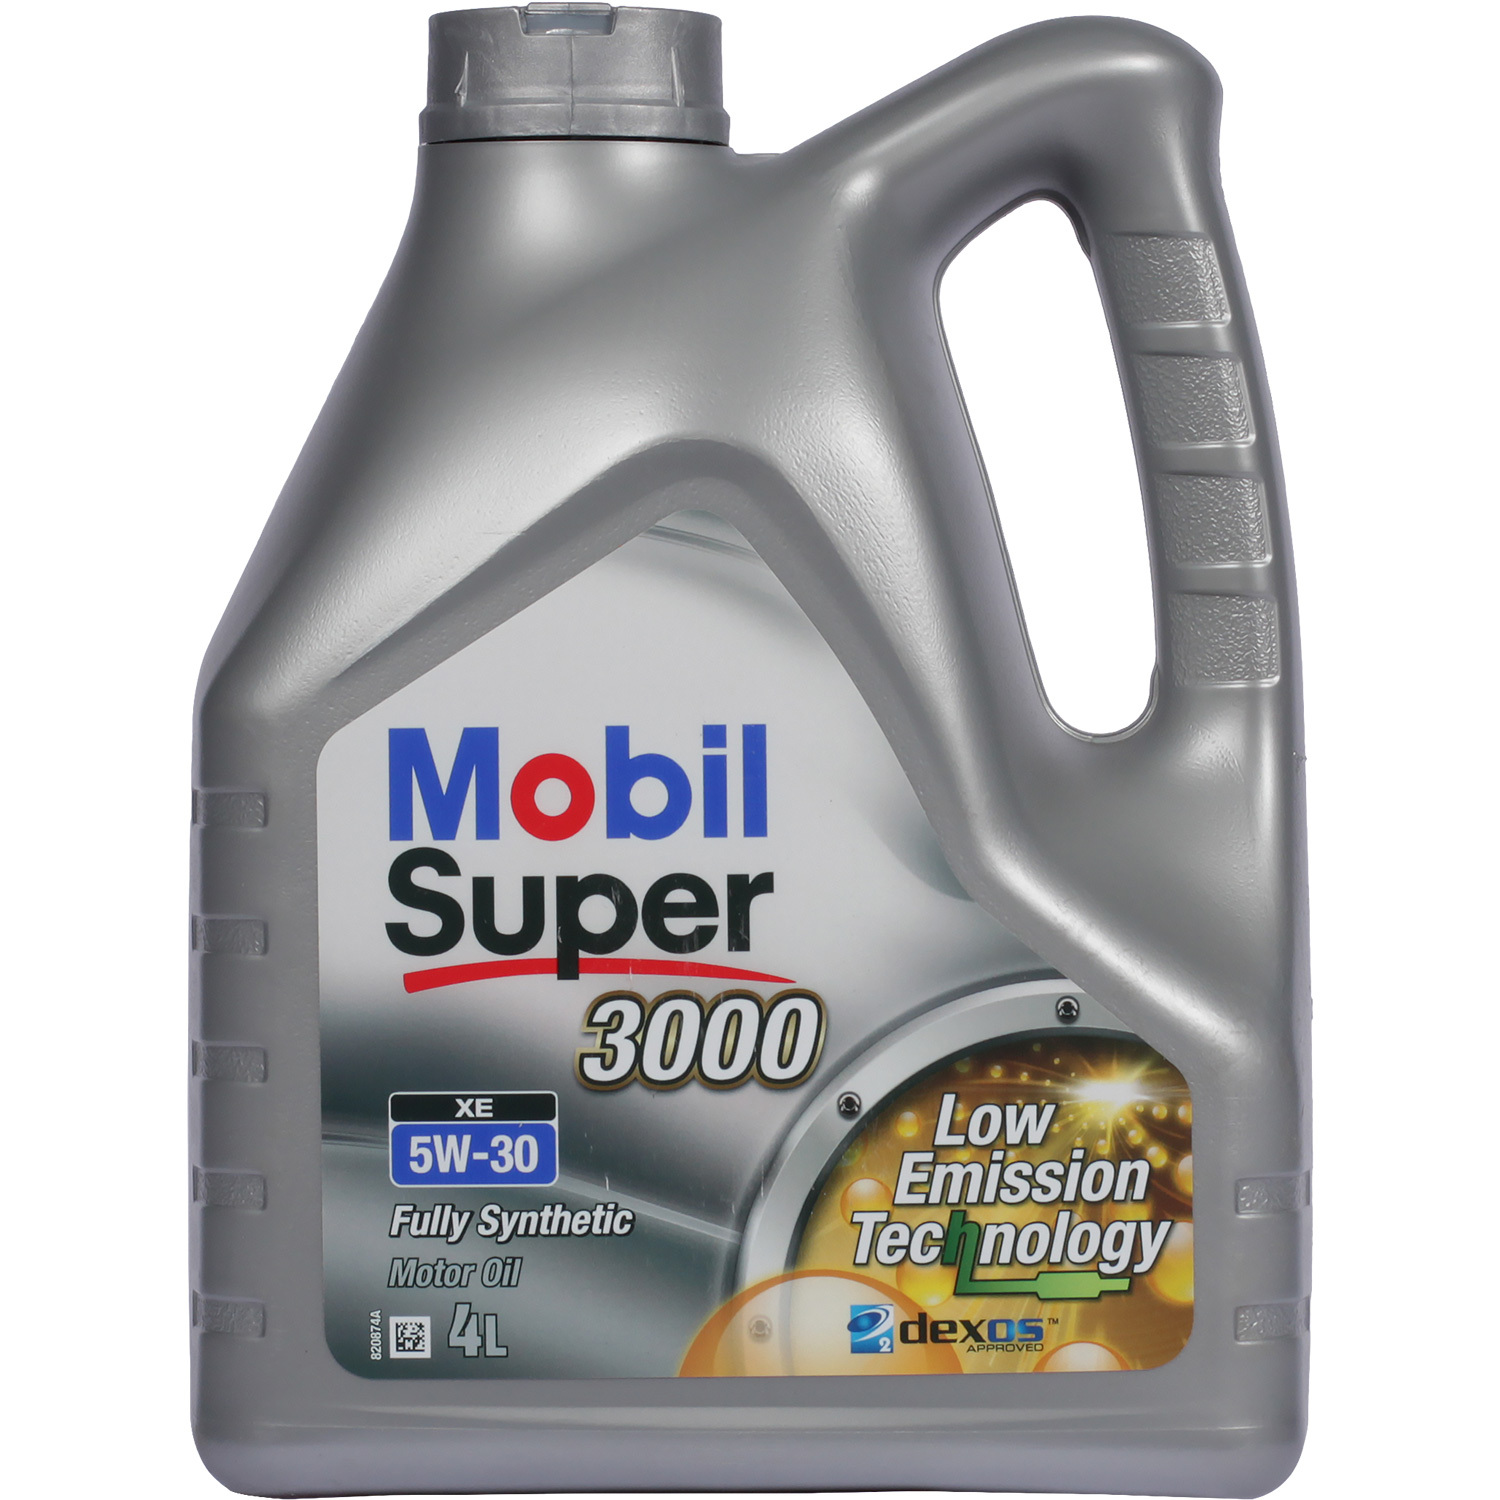 Mobil Моторное масло Mobil Super 3000 XE 5W-30, 4 л mobil моторное масло mobil super 3000 x1 5w 40 4 л